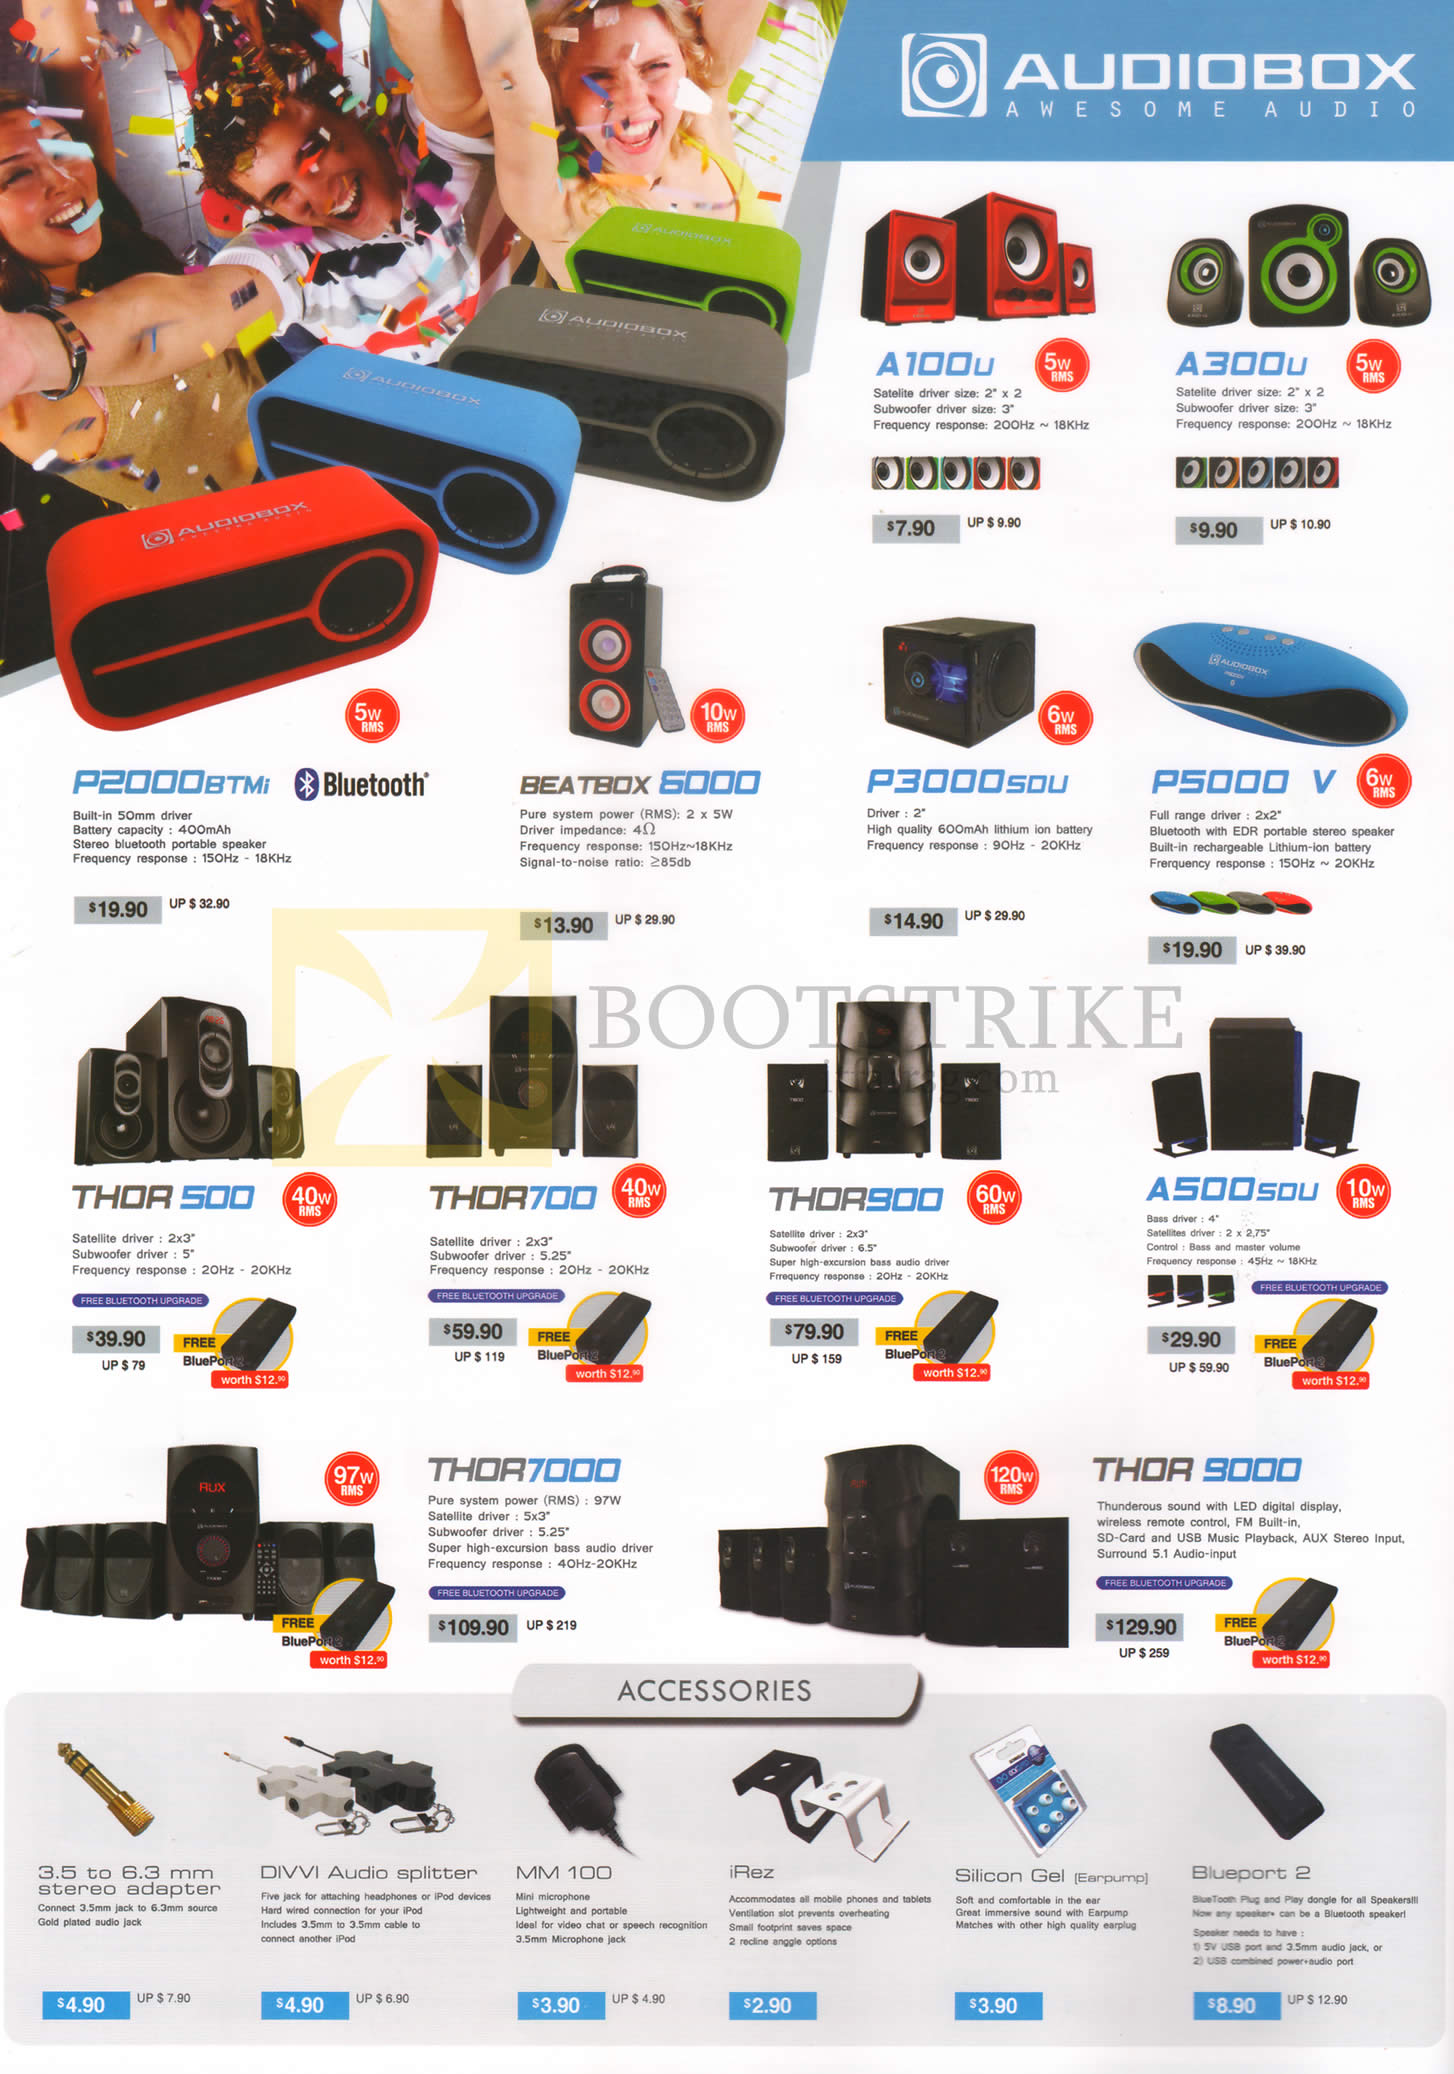 COMEX 2015 price list image brochure of Audiobox Speakers, Accessories, A100u, A300u, P2000BTMi, Beatbox 6000, P3000SDU, P5000V, Thor 500, 700, 900, 7000, 9000, A500 SDU, MM100, IRez, Silicon Gel, Blueport 2